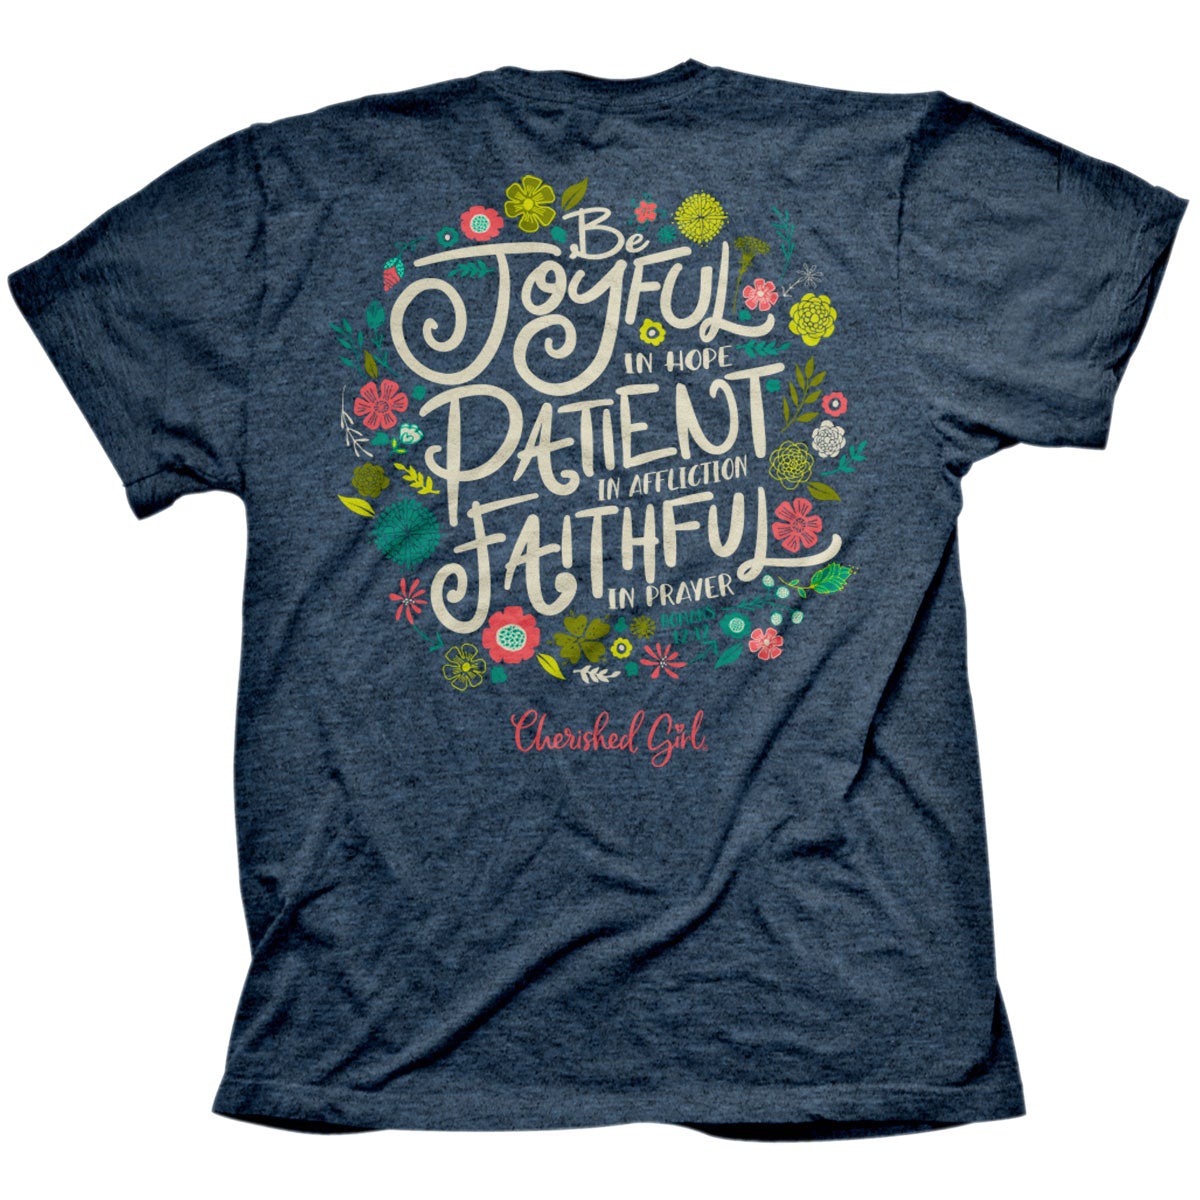 Cherished Girl Joyful Faithful Christian T-Shirt